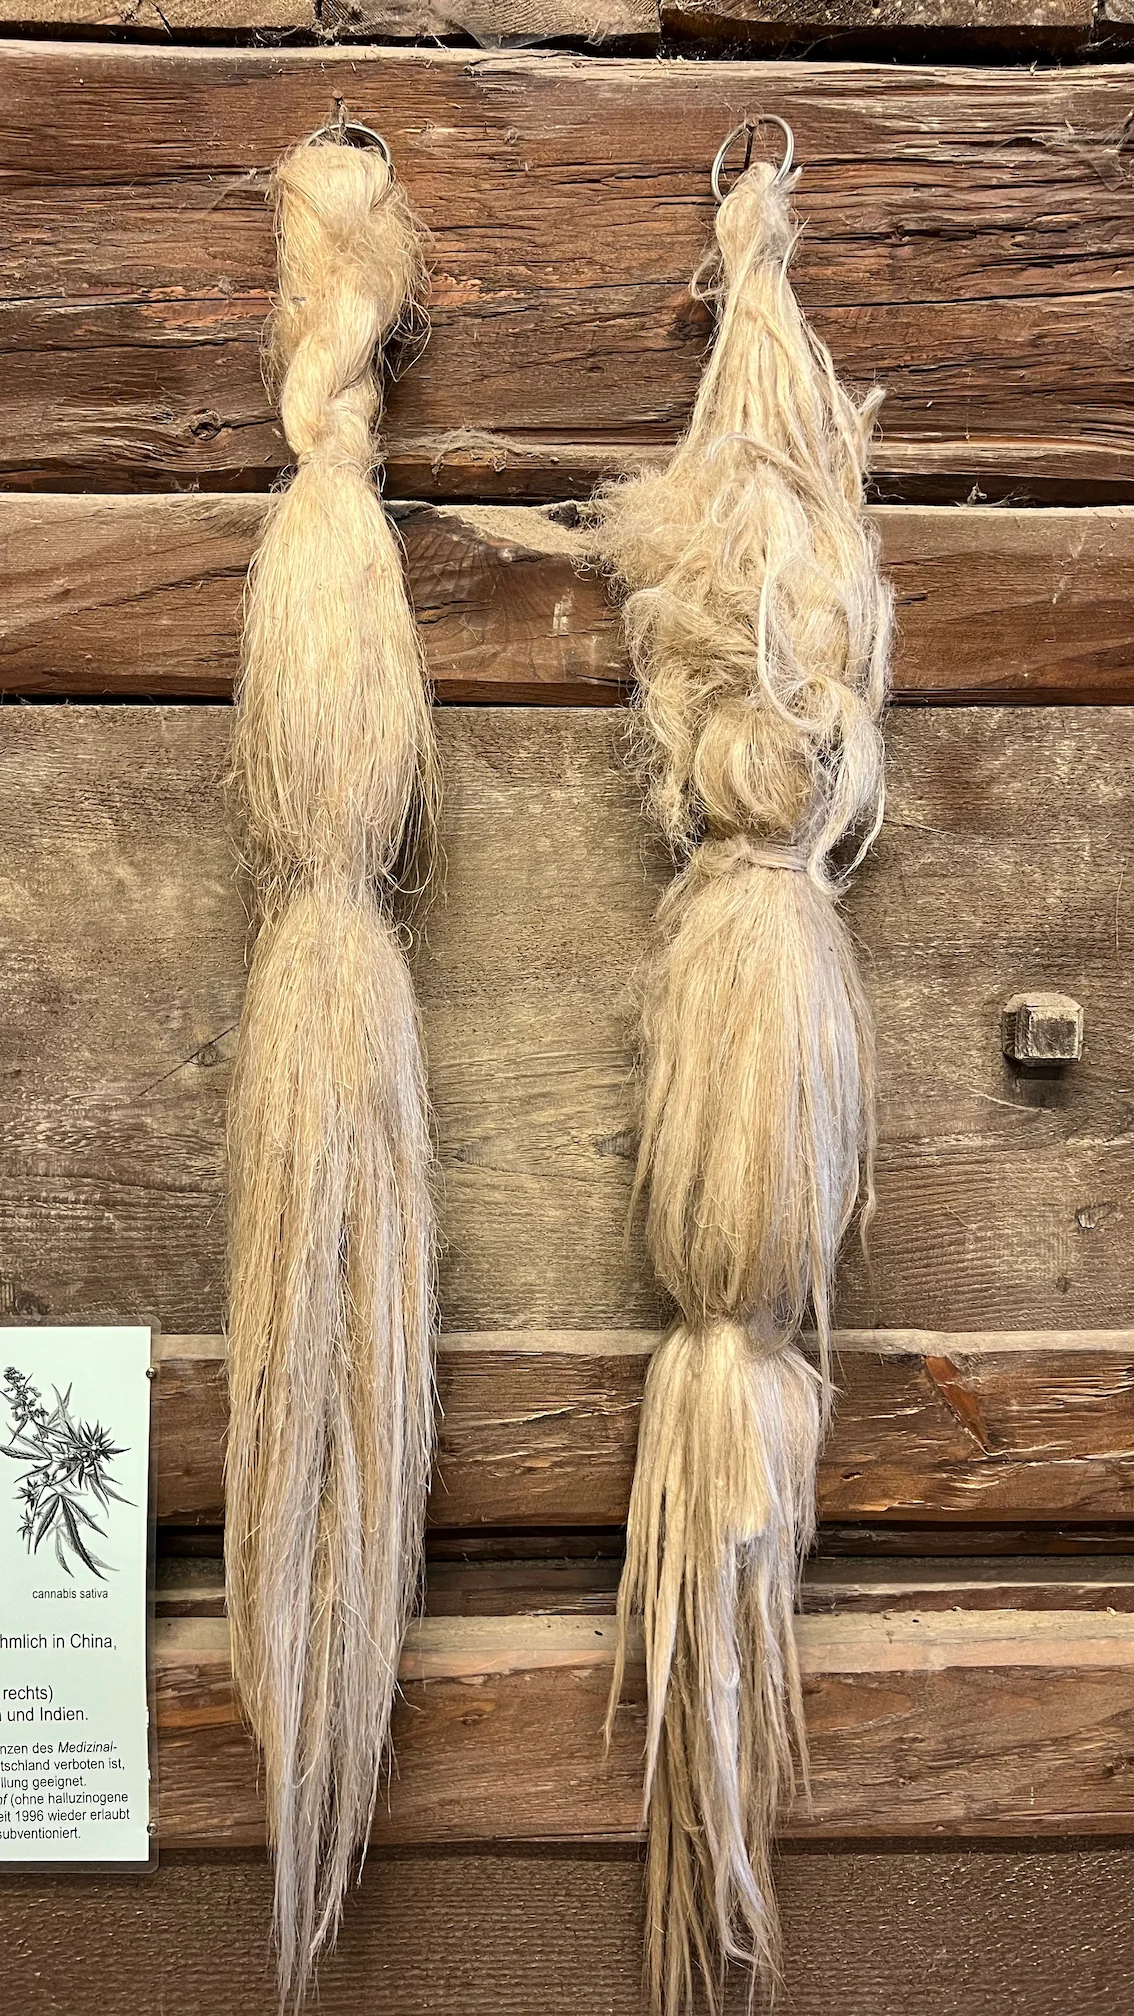 Two strands of hemp - Made from useful hemp fibers